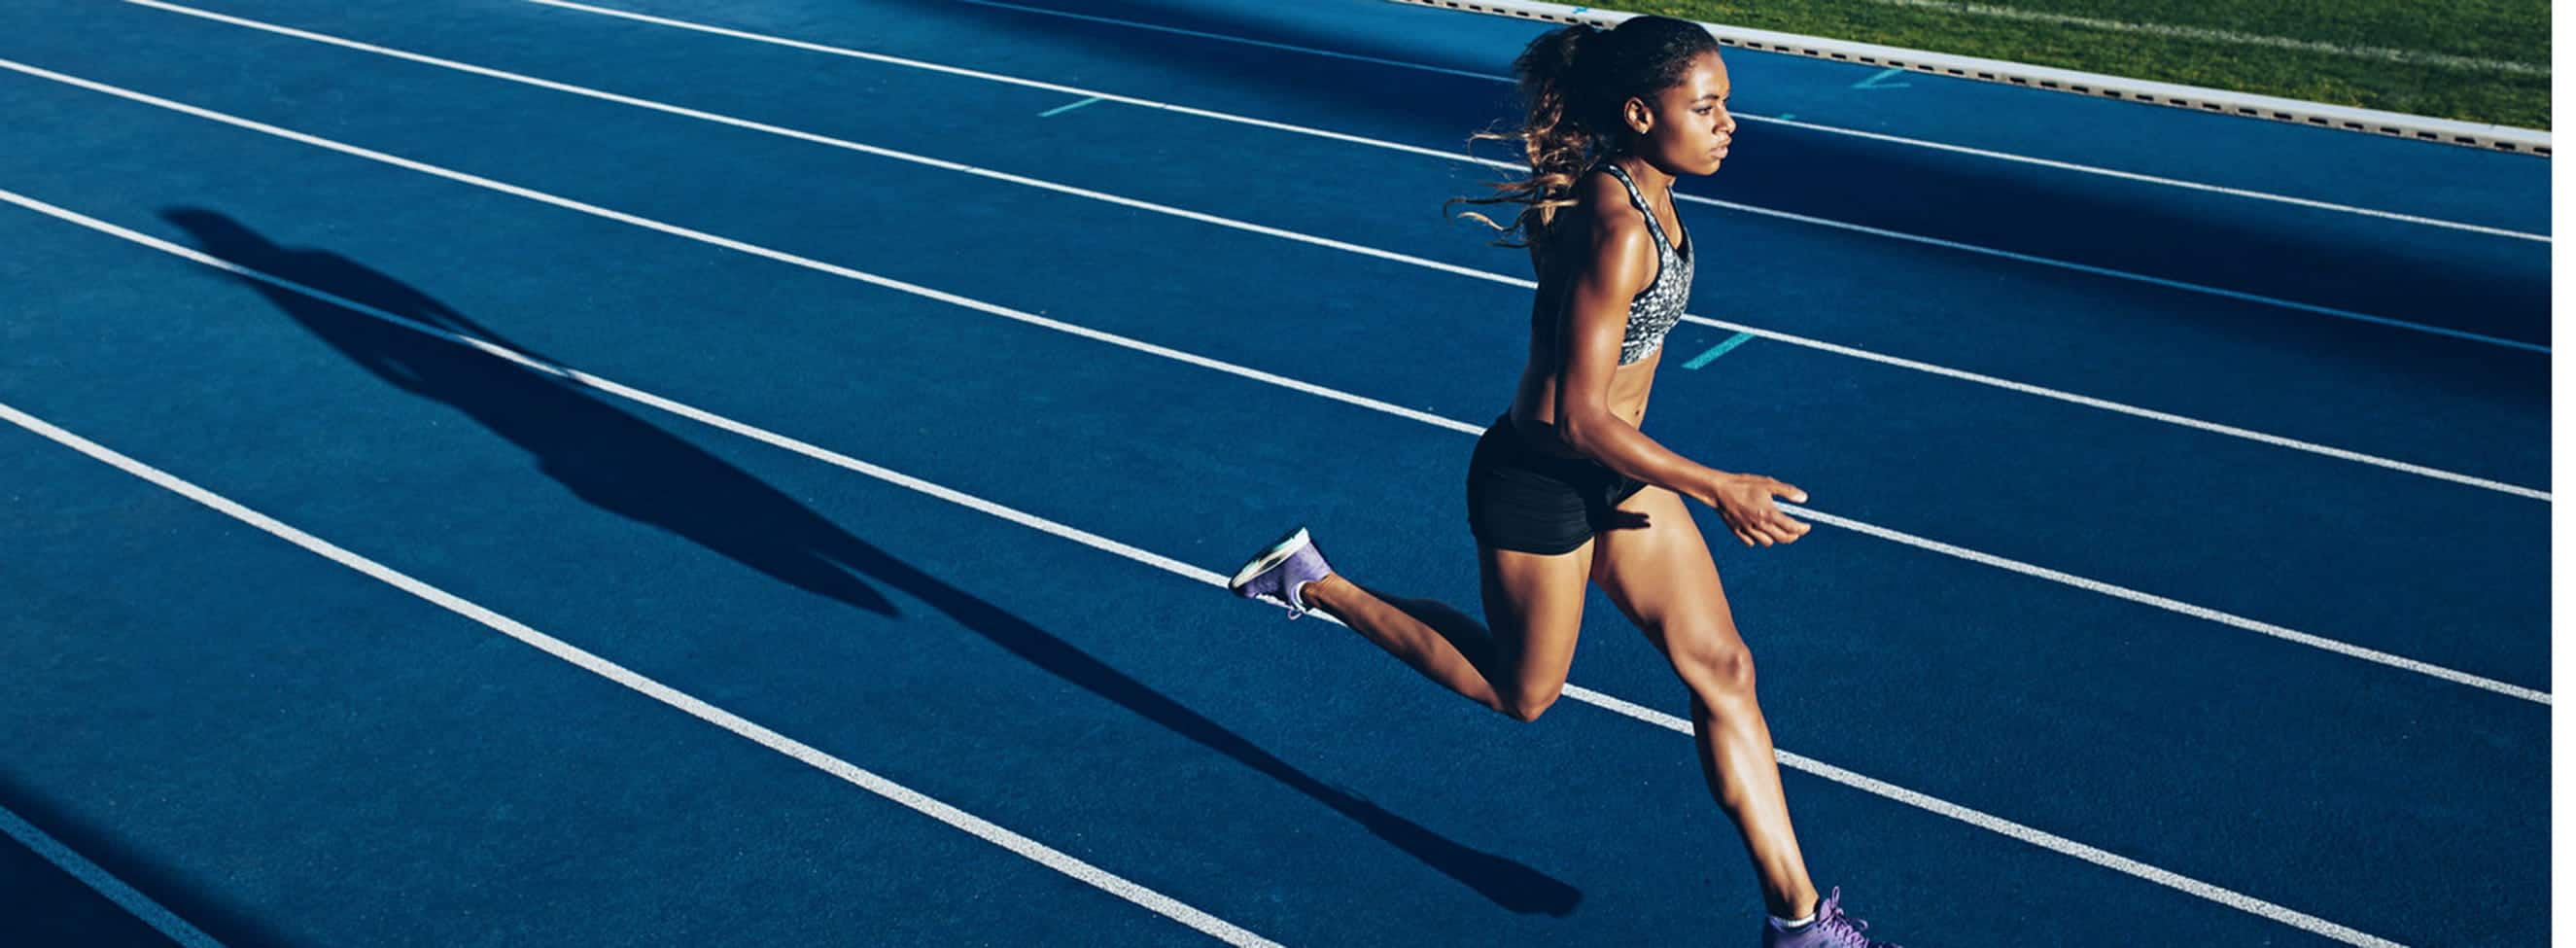 Woman_Athlete_Running_on_Racetrack_S_0627